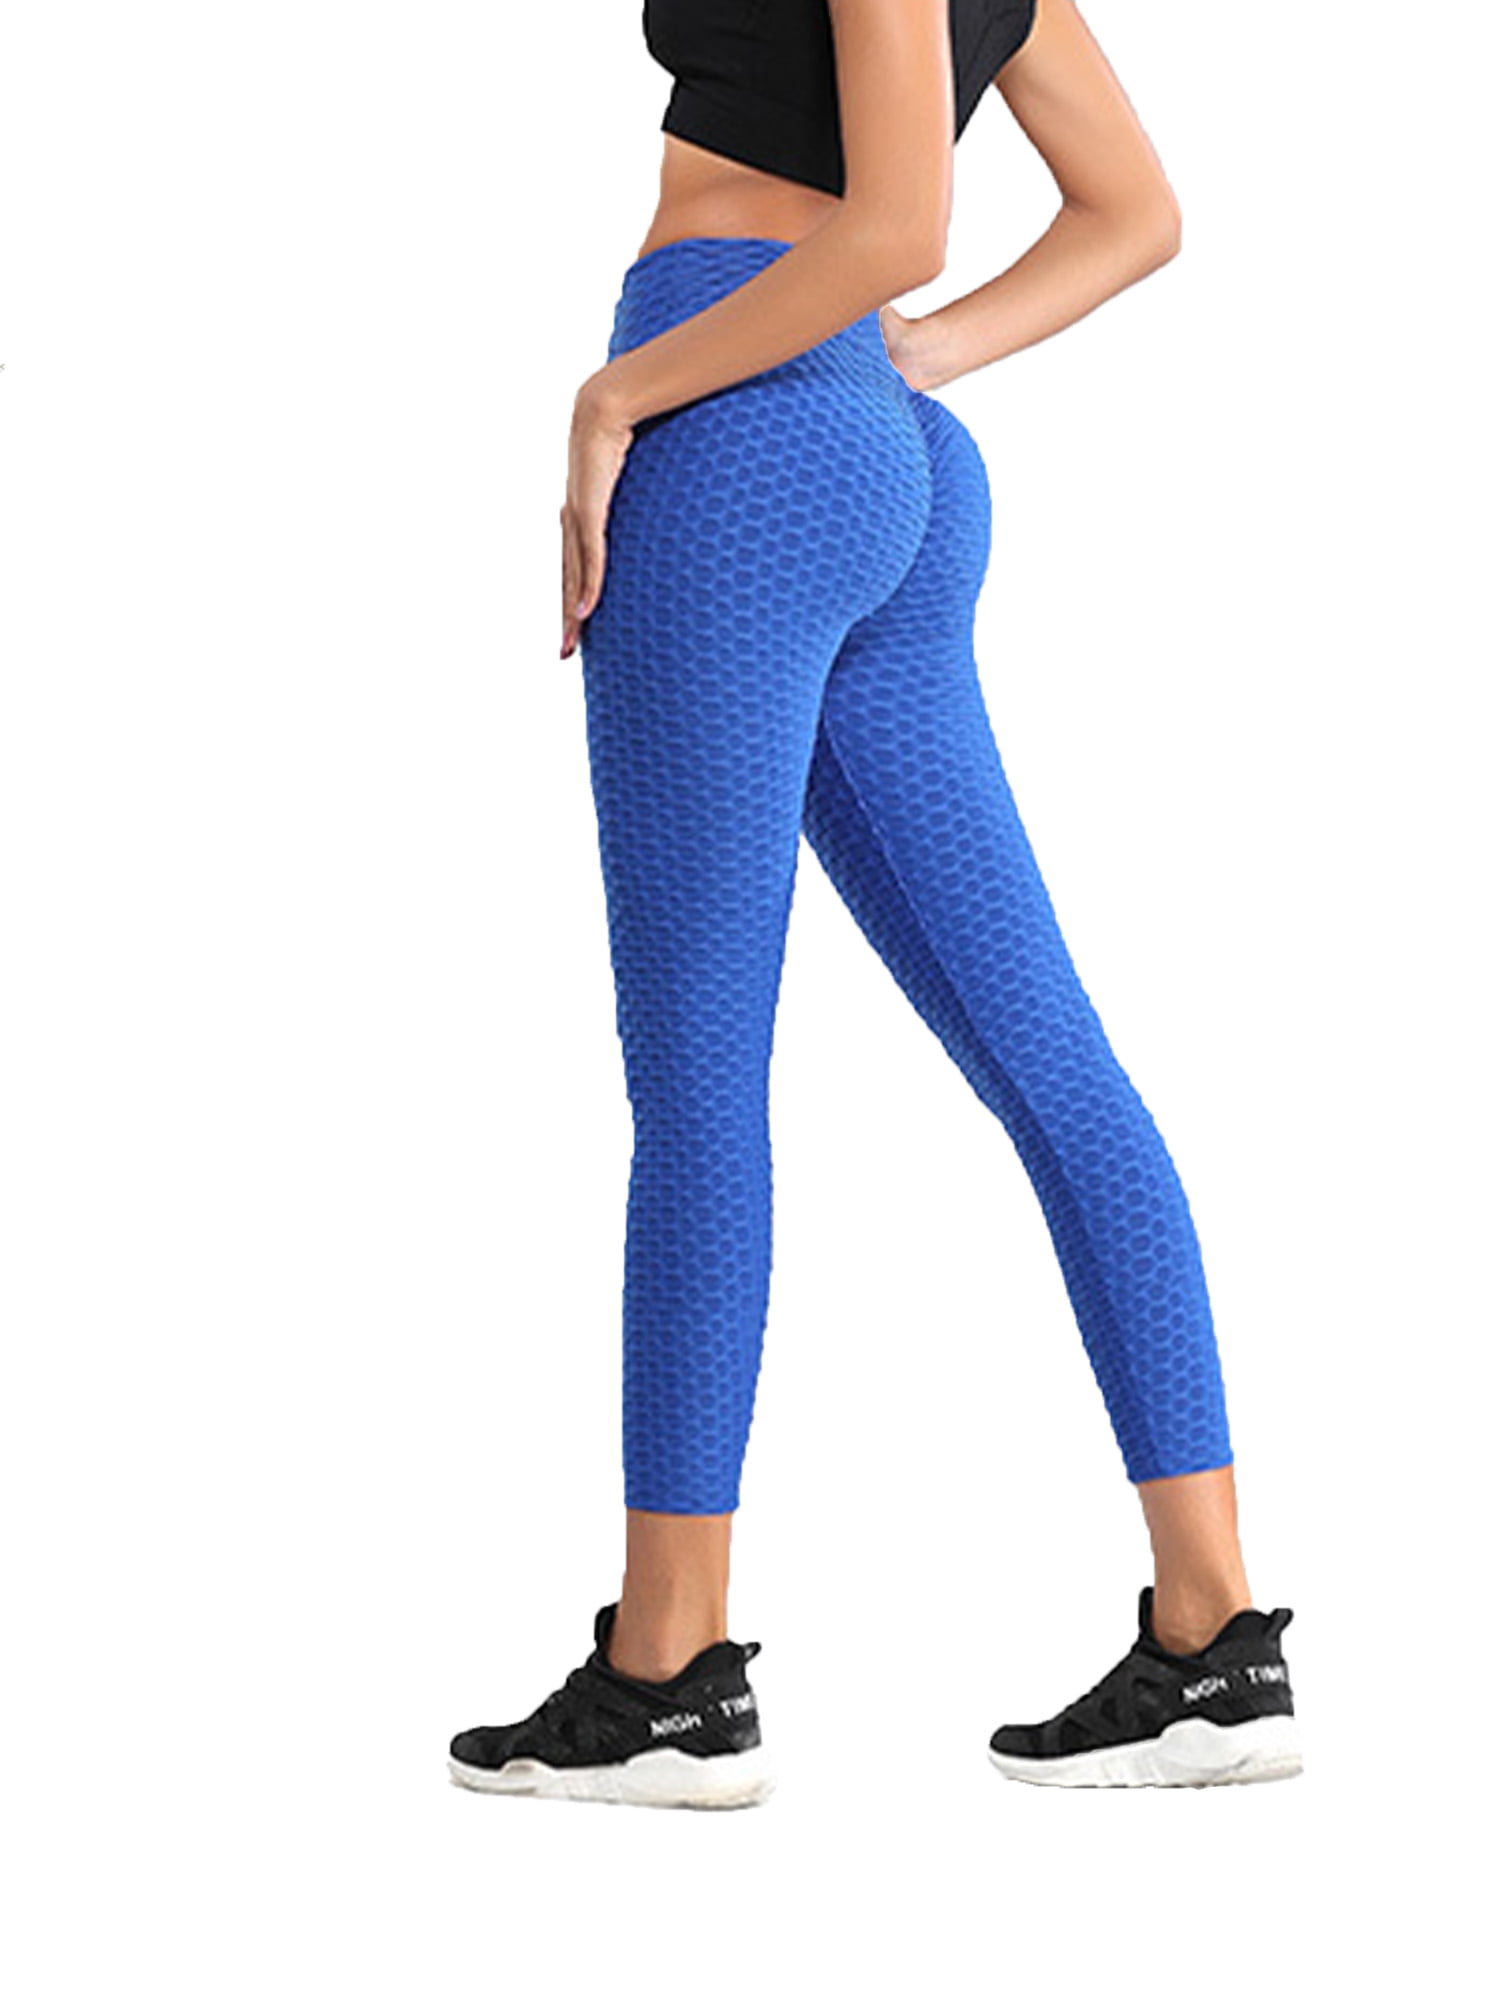 Women's Anti-Cellulite High Waist Pants Yoga Gym Leggings Sport Elastic Trousers 